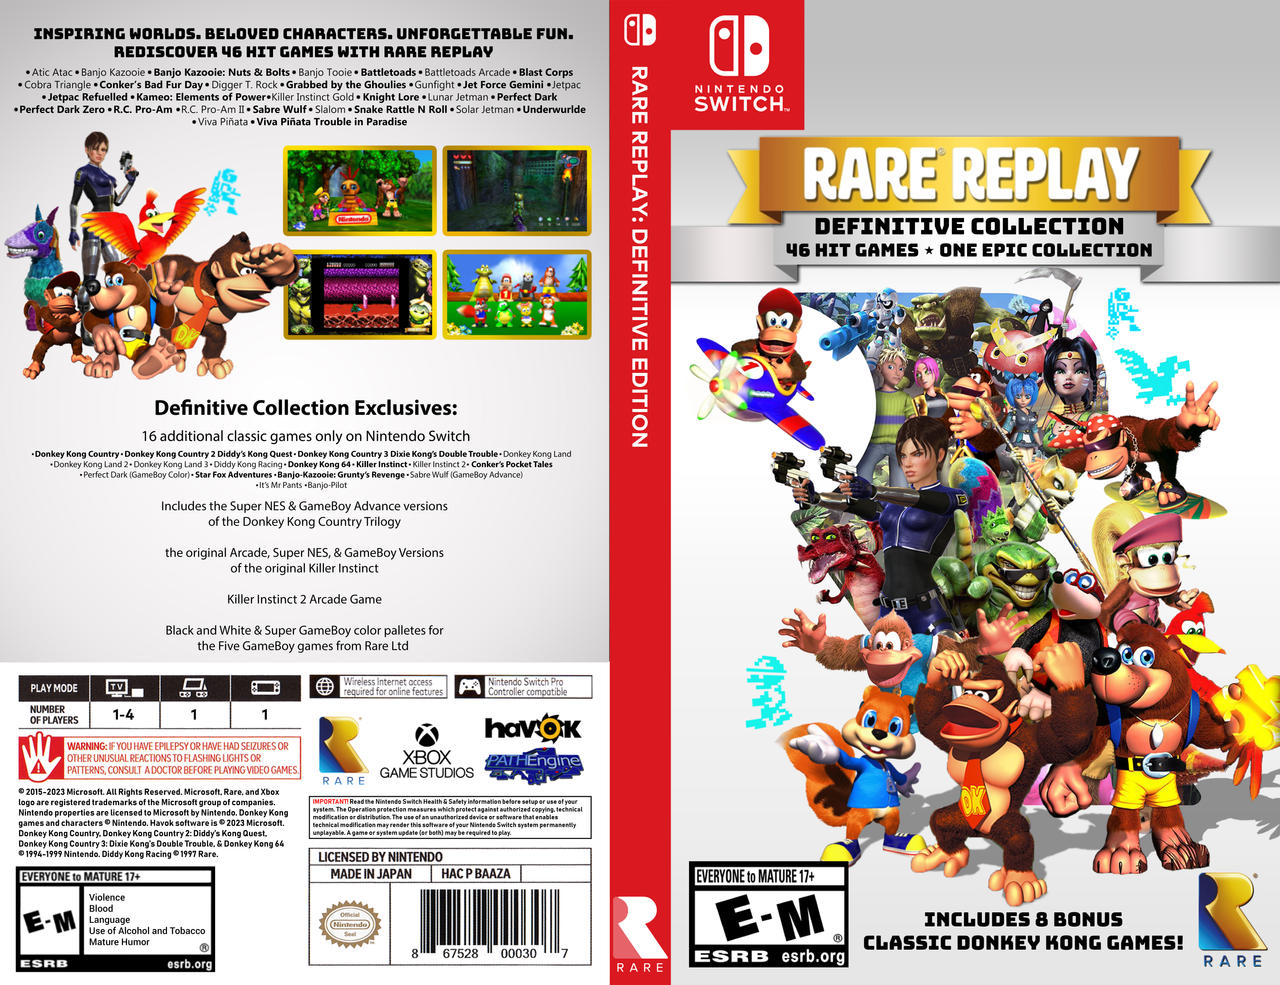 Rare Replay's Nintendo 64 games run at 1080p